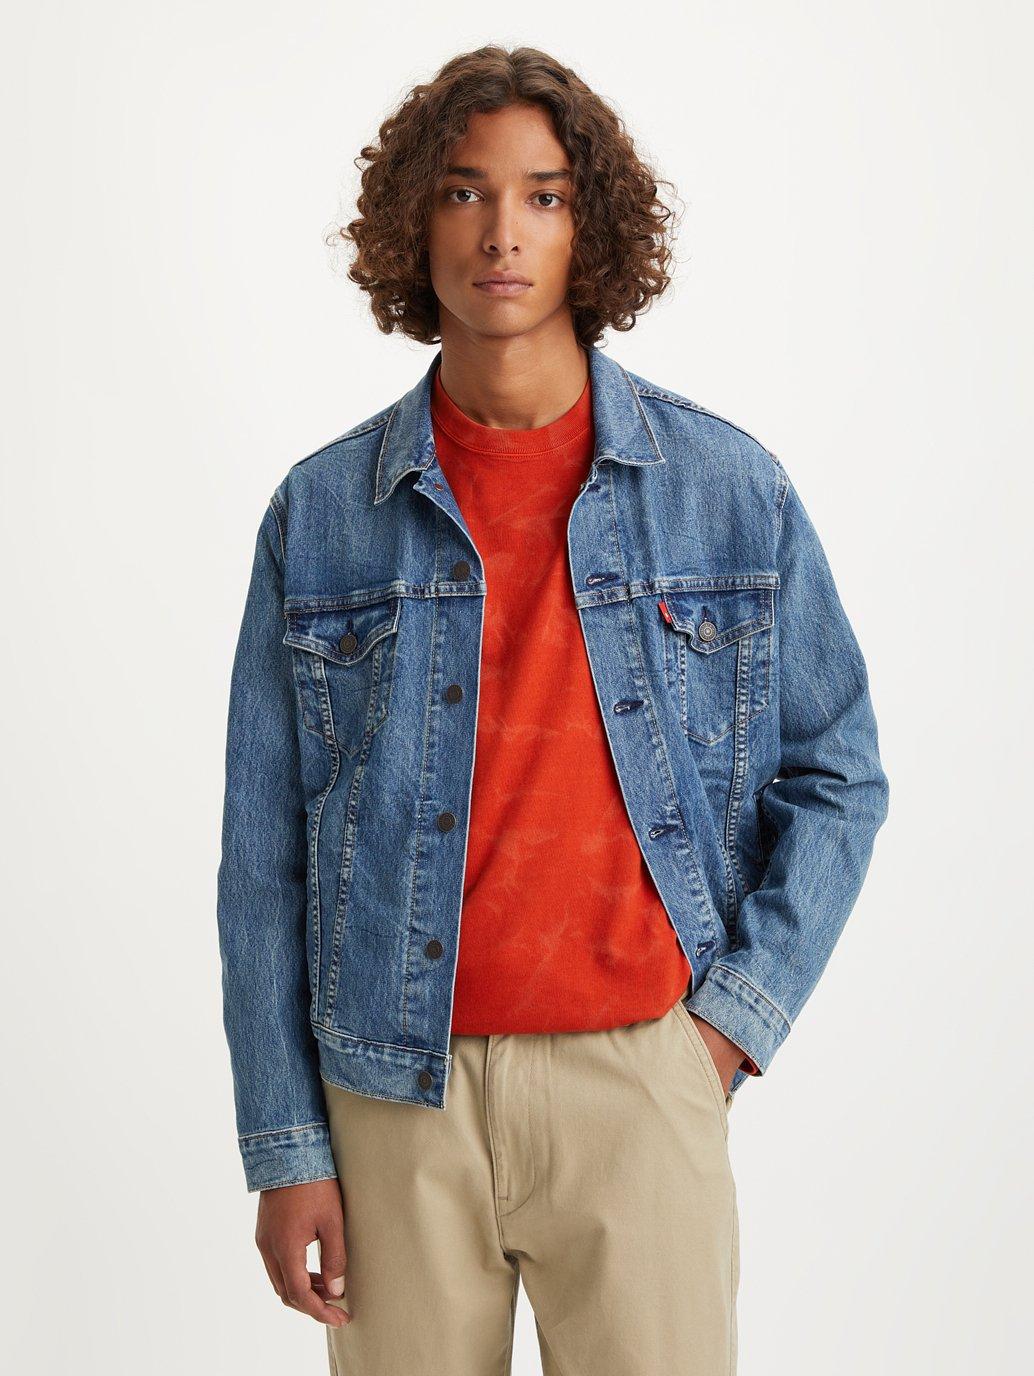 Buy Levi's® Men's Trucker Jacket | Levi’s Official Online Store SG